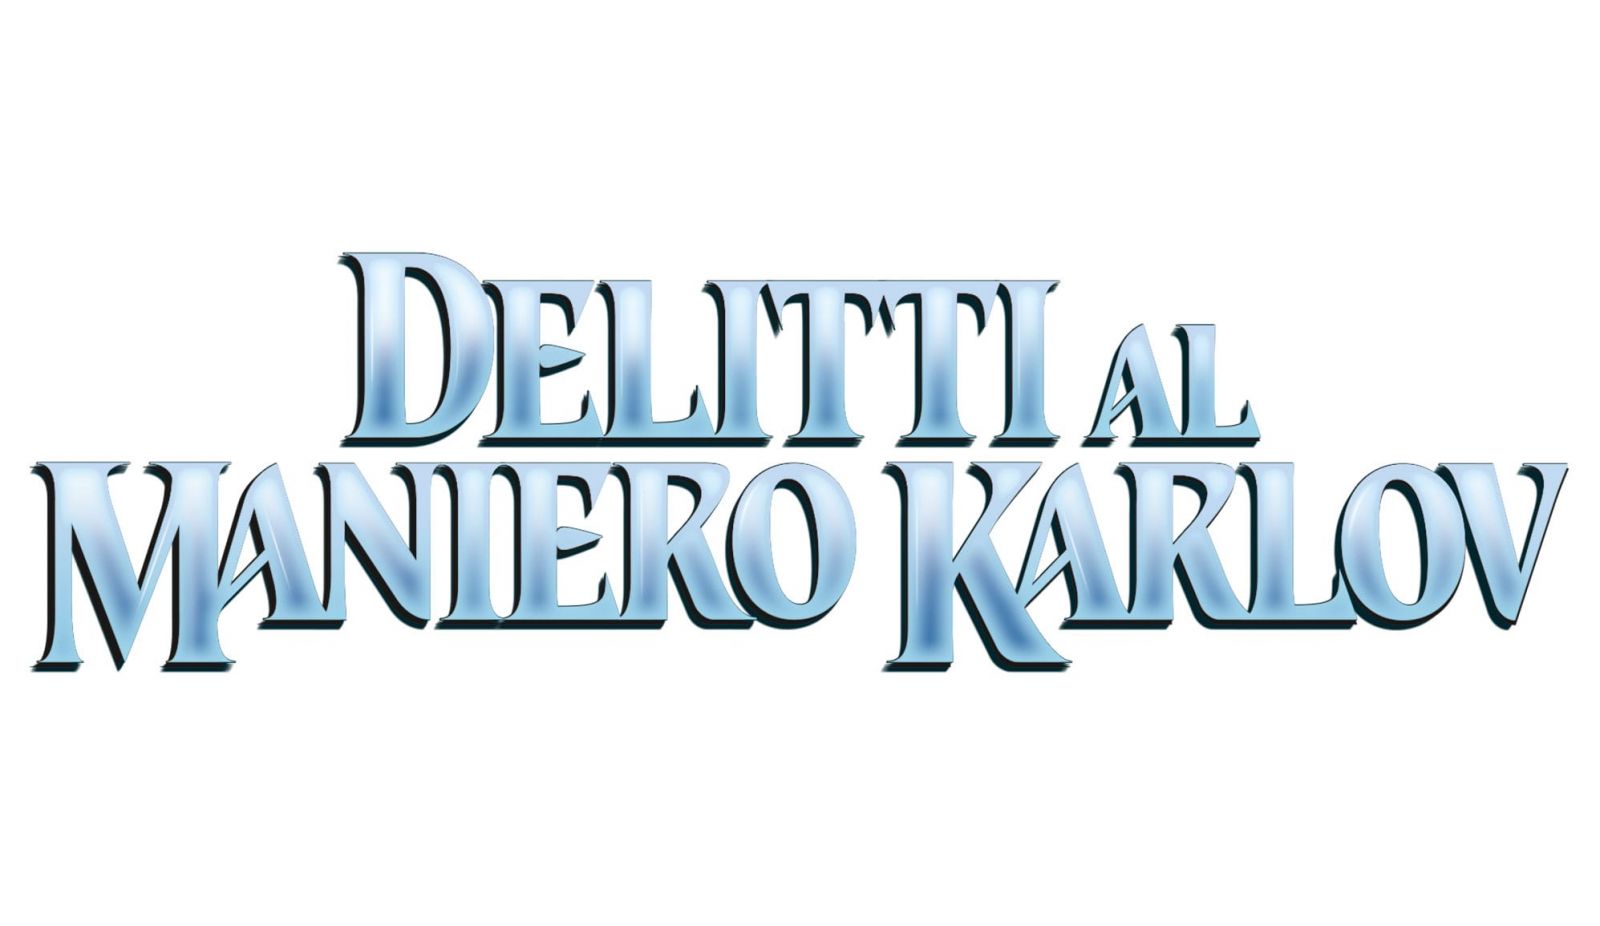 Magic the Gathering Delitti al Maniero Karlov Commander Decks Display (4) italian Wizards of the Coast